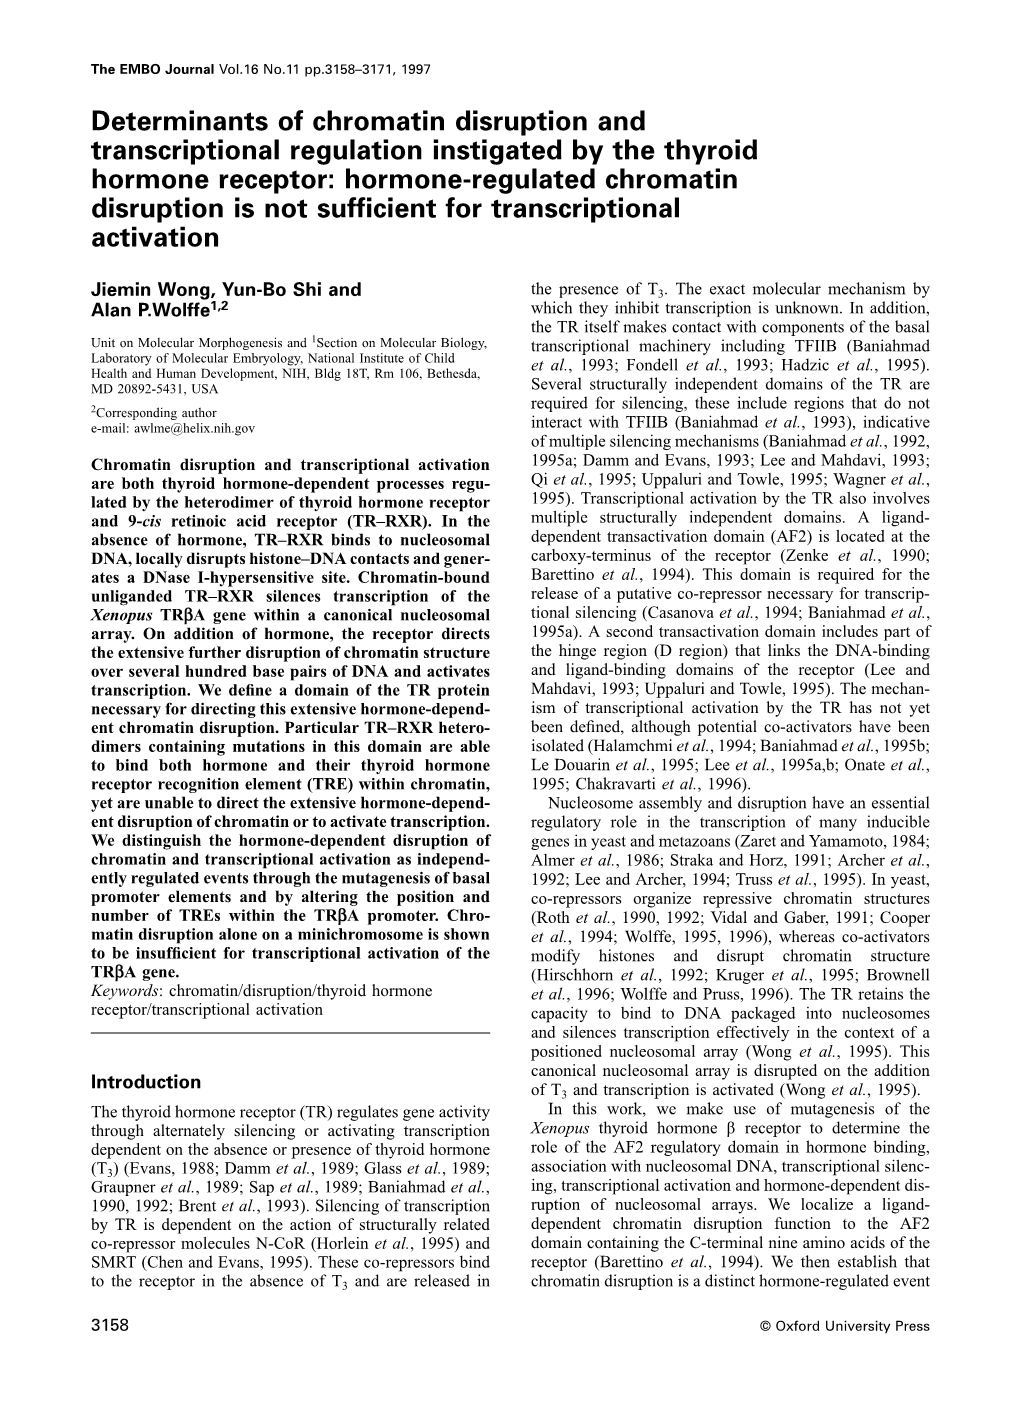 Determinants of Chromatin Disruption and Transcriptional Regulation